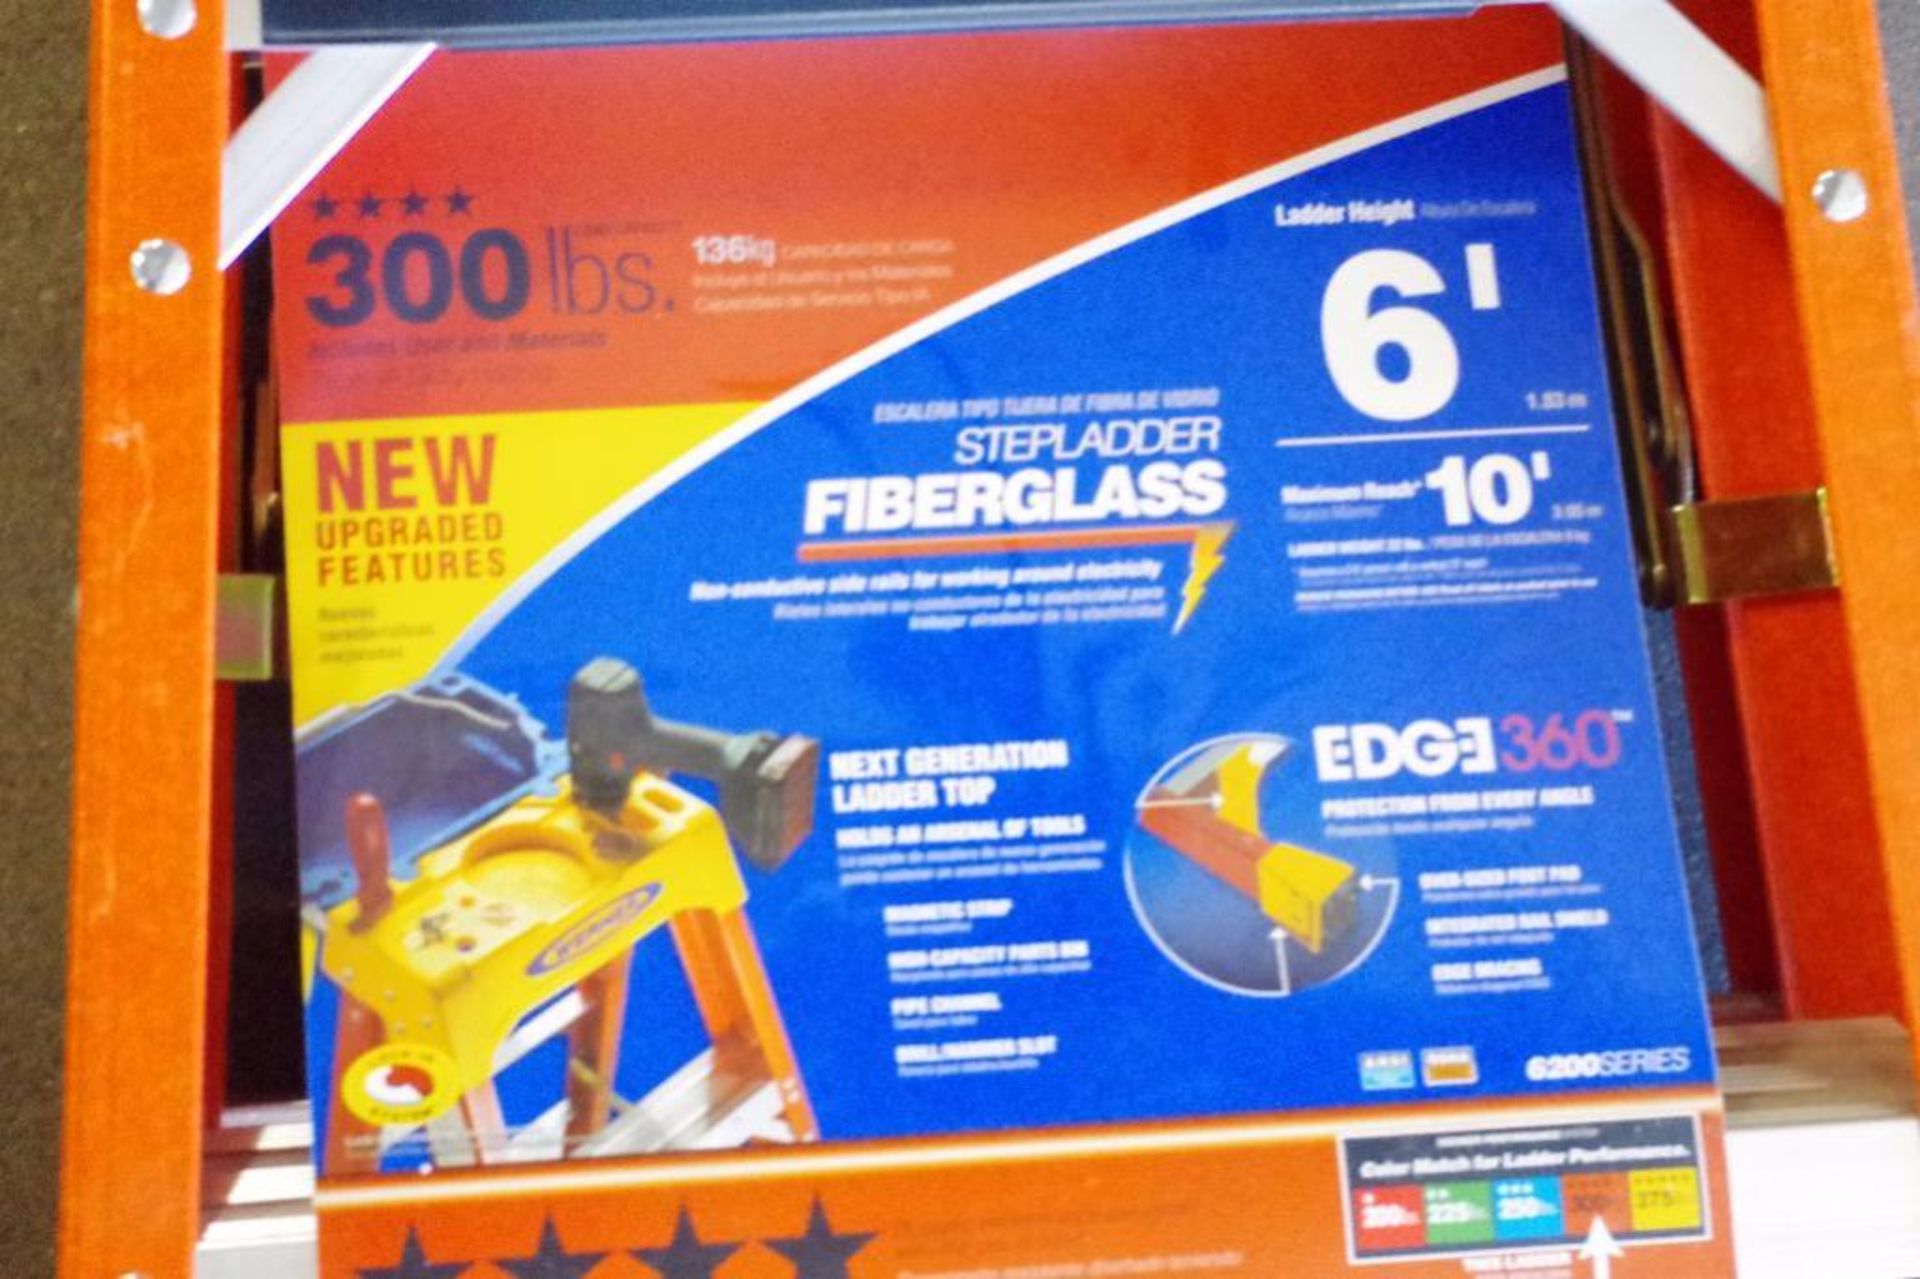 ?WERNER 6' Orange Fiberglass Ladder, 300 lb. Capacity, M/N 6200 - Image 4 of 5